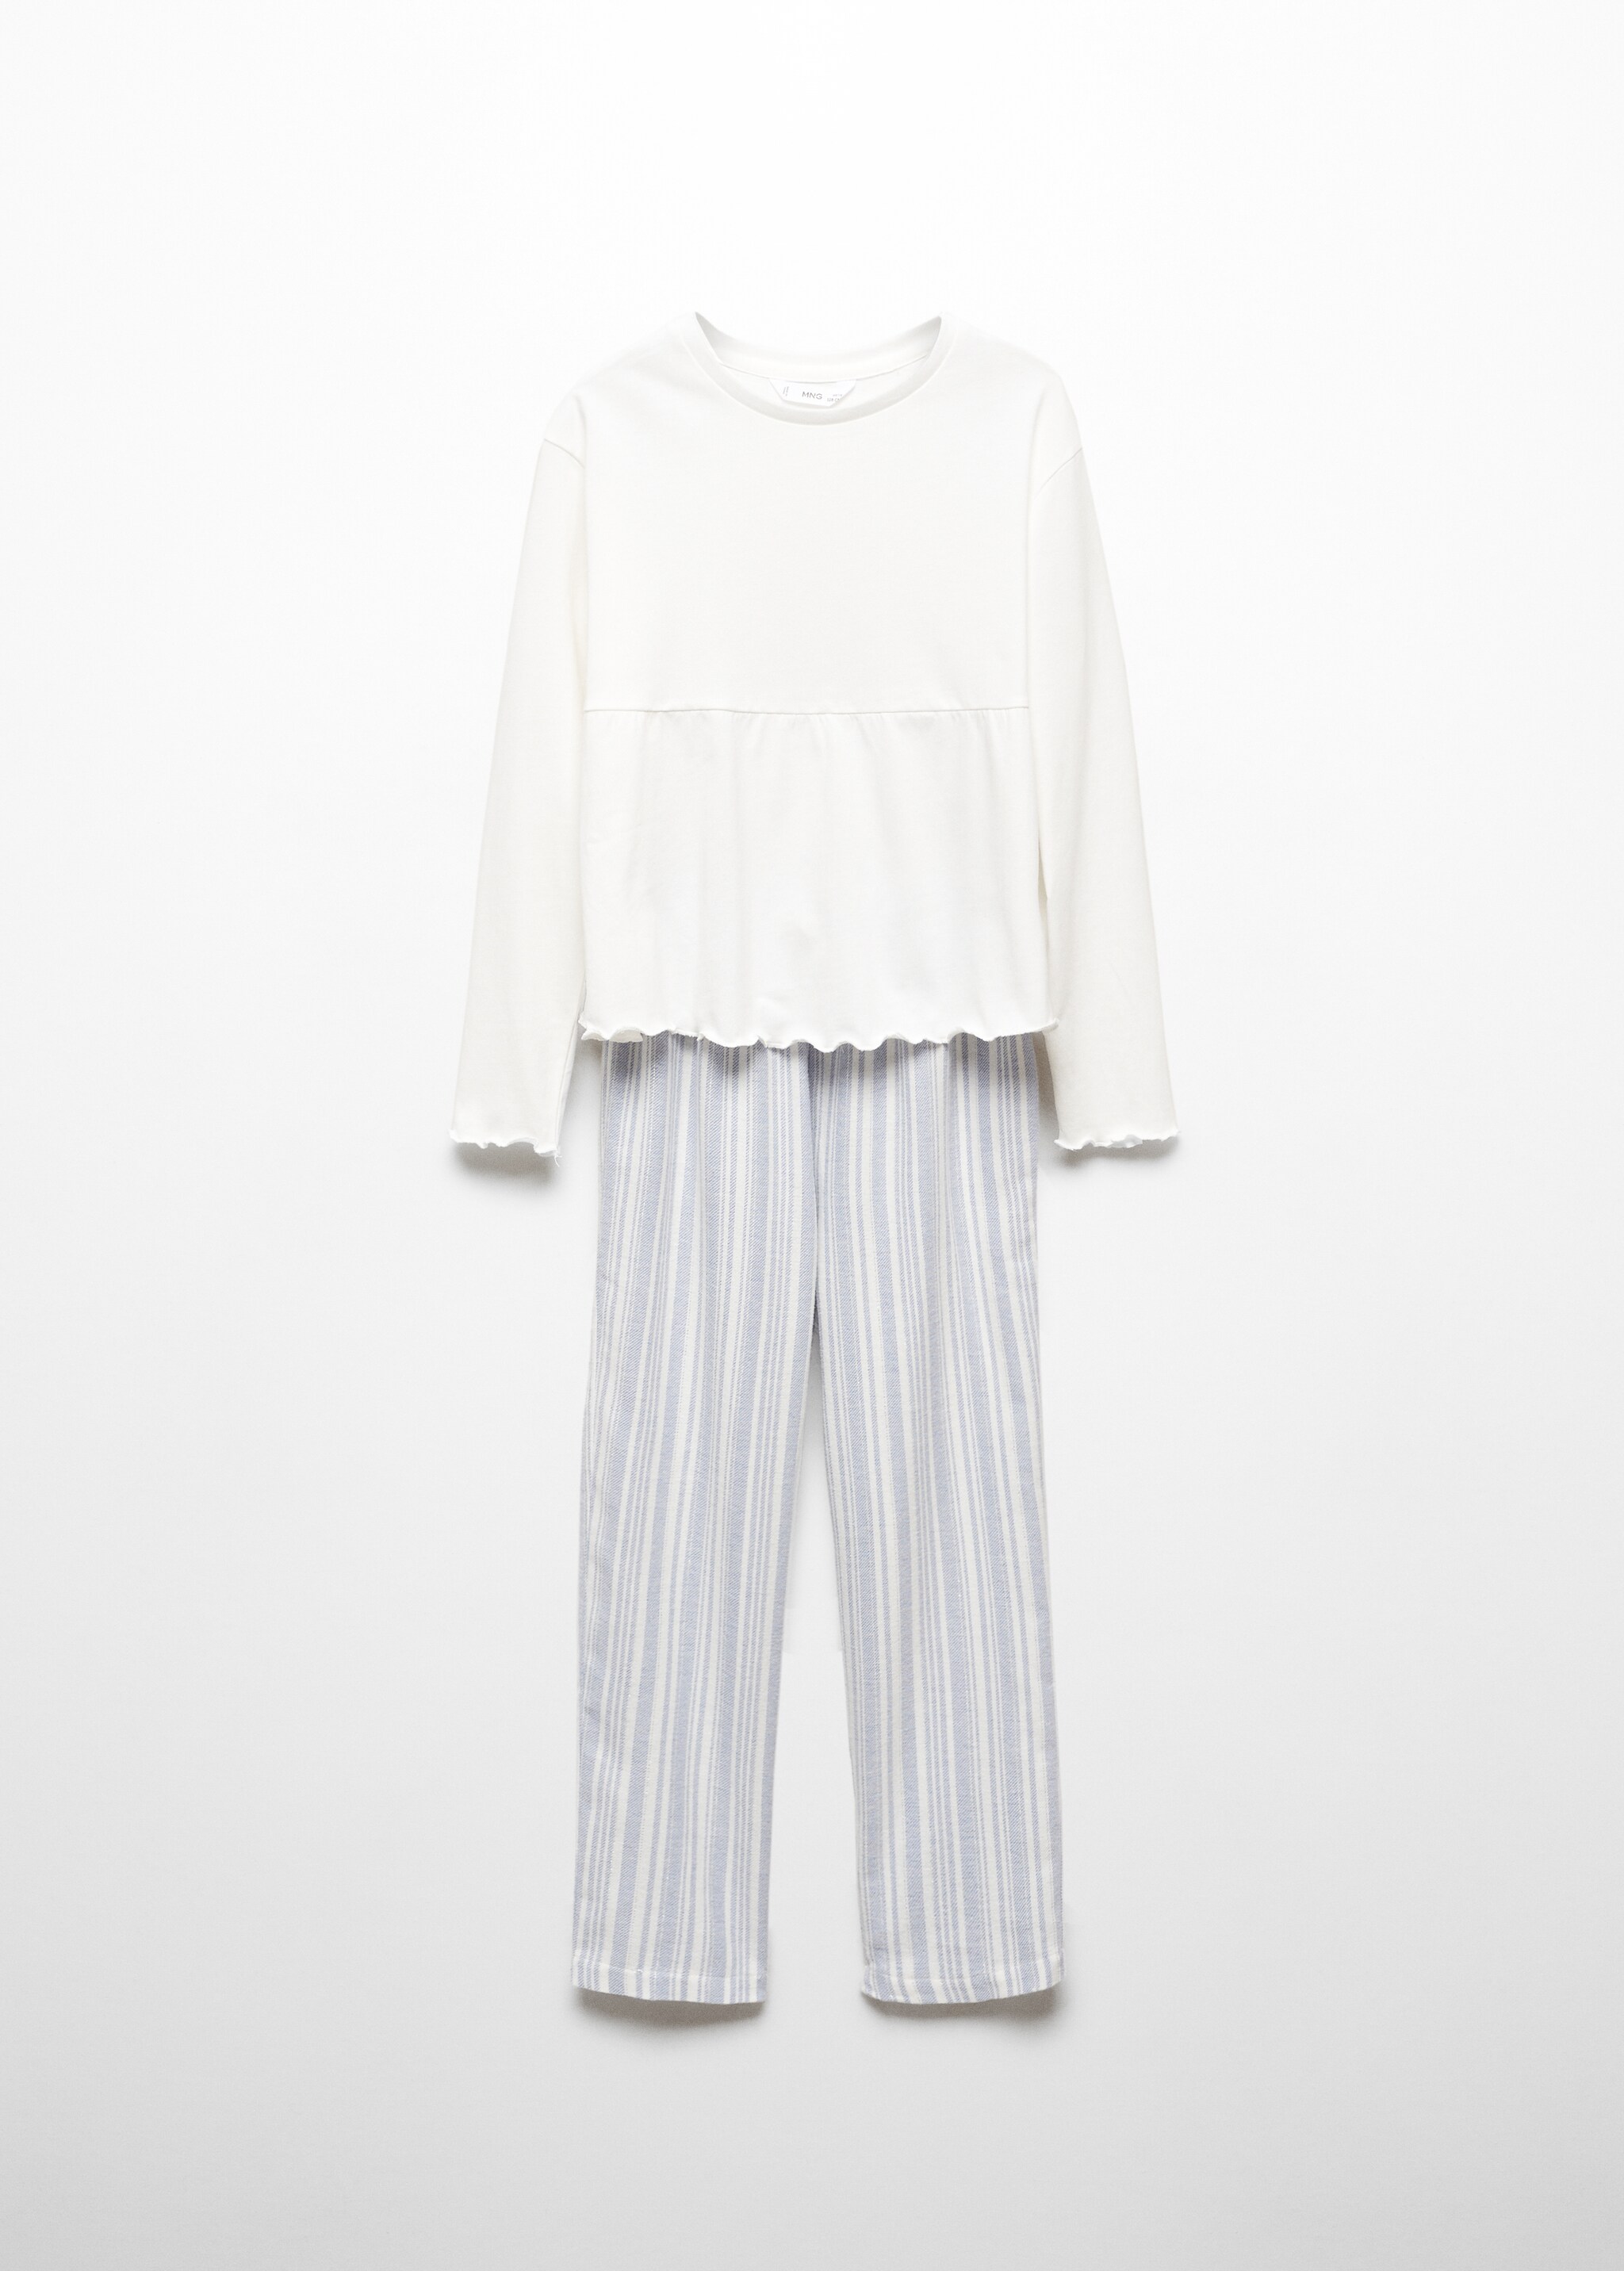 Pijama largo algodón rayas - Artículo sin modelo